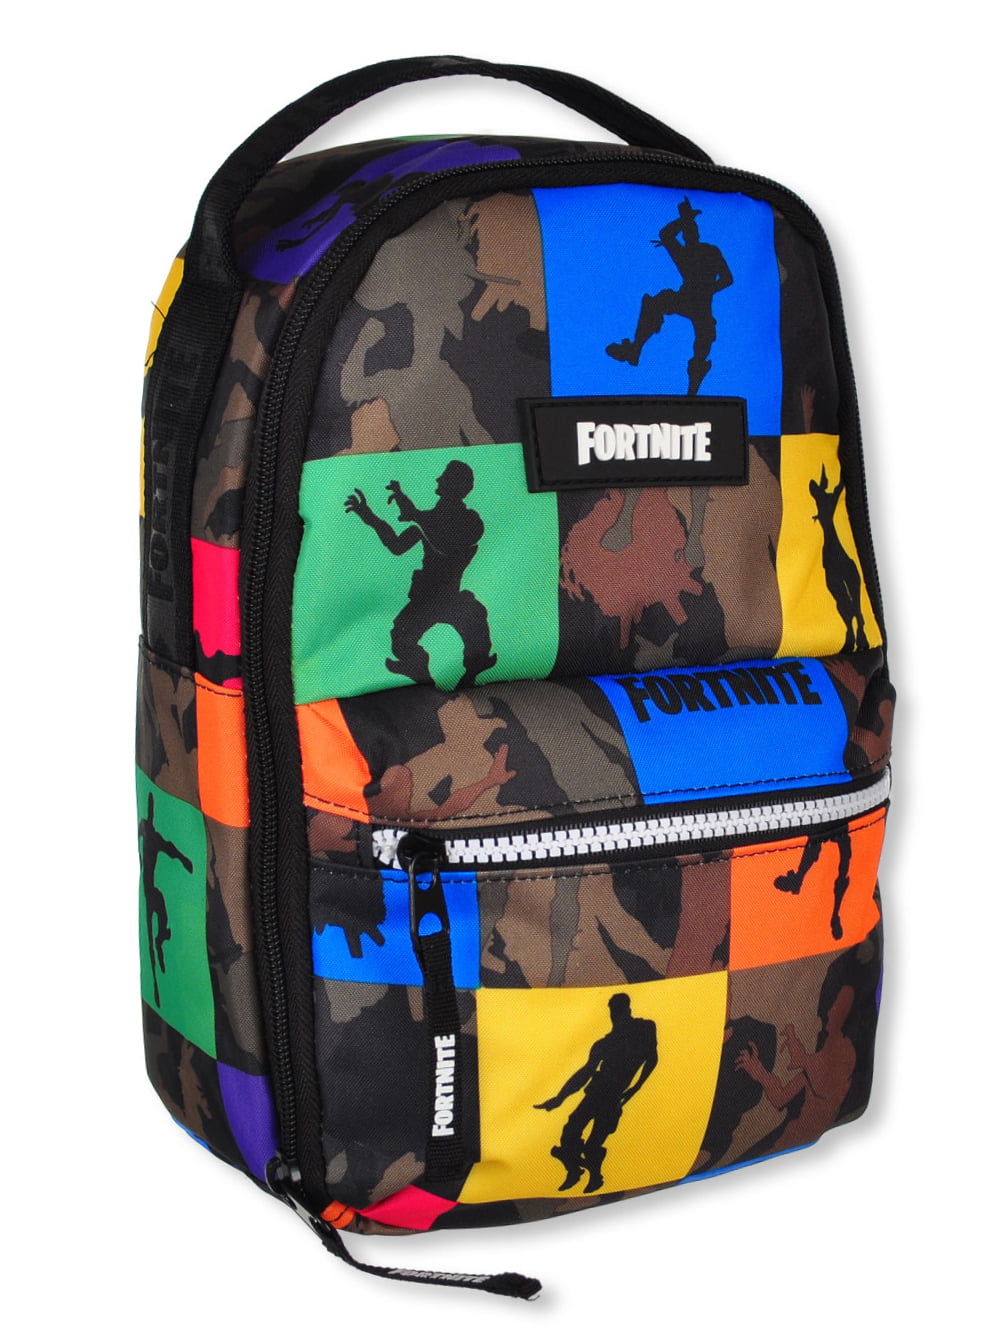 Fortnite - Fornite Mini Backpack - Walmart.com - 1000 x 1333 jpeg 716kB